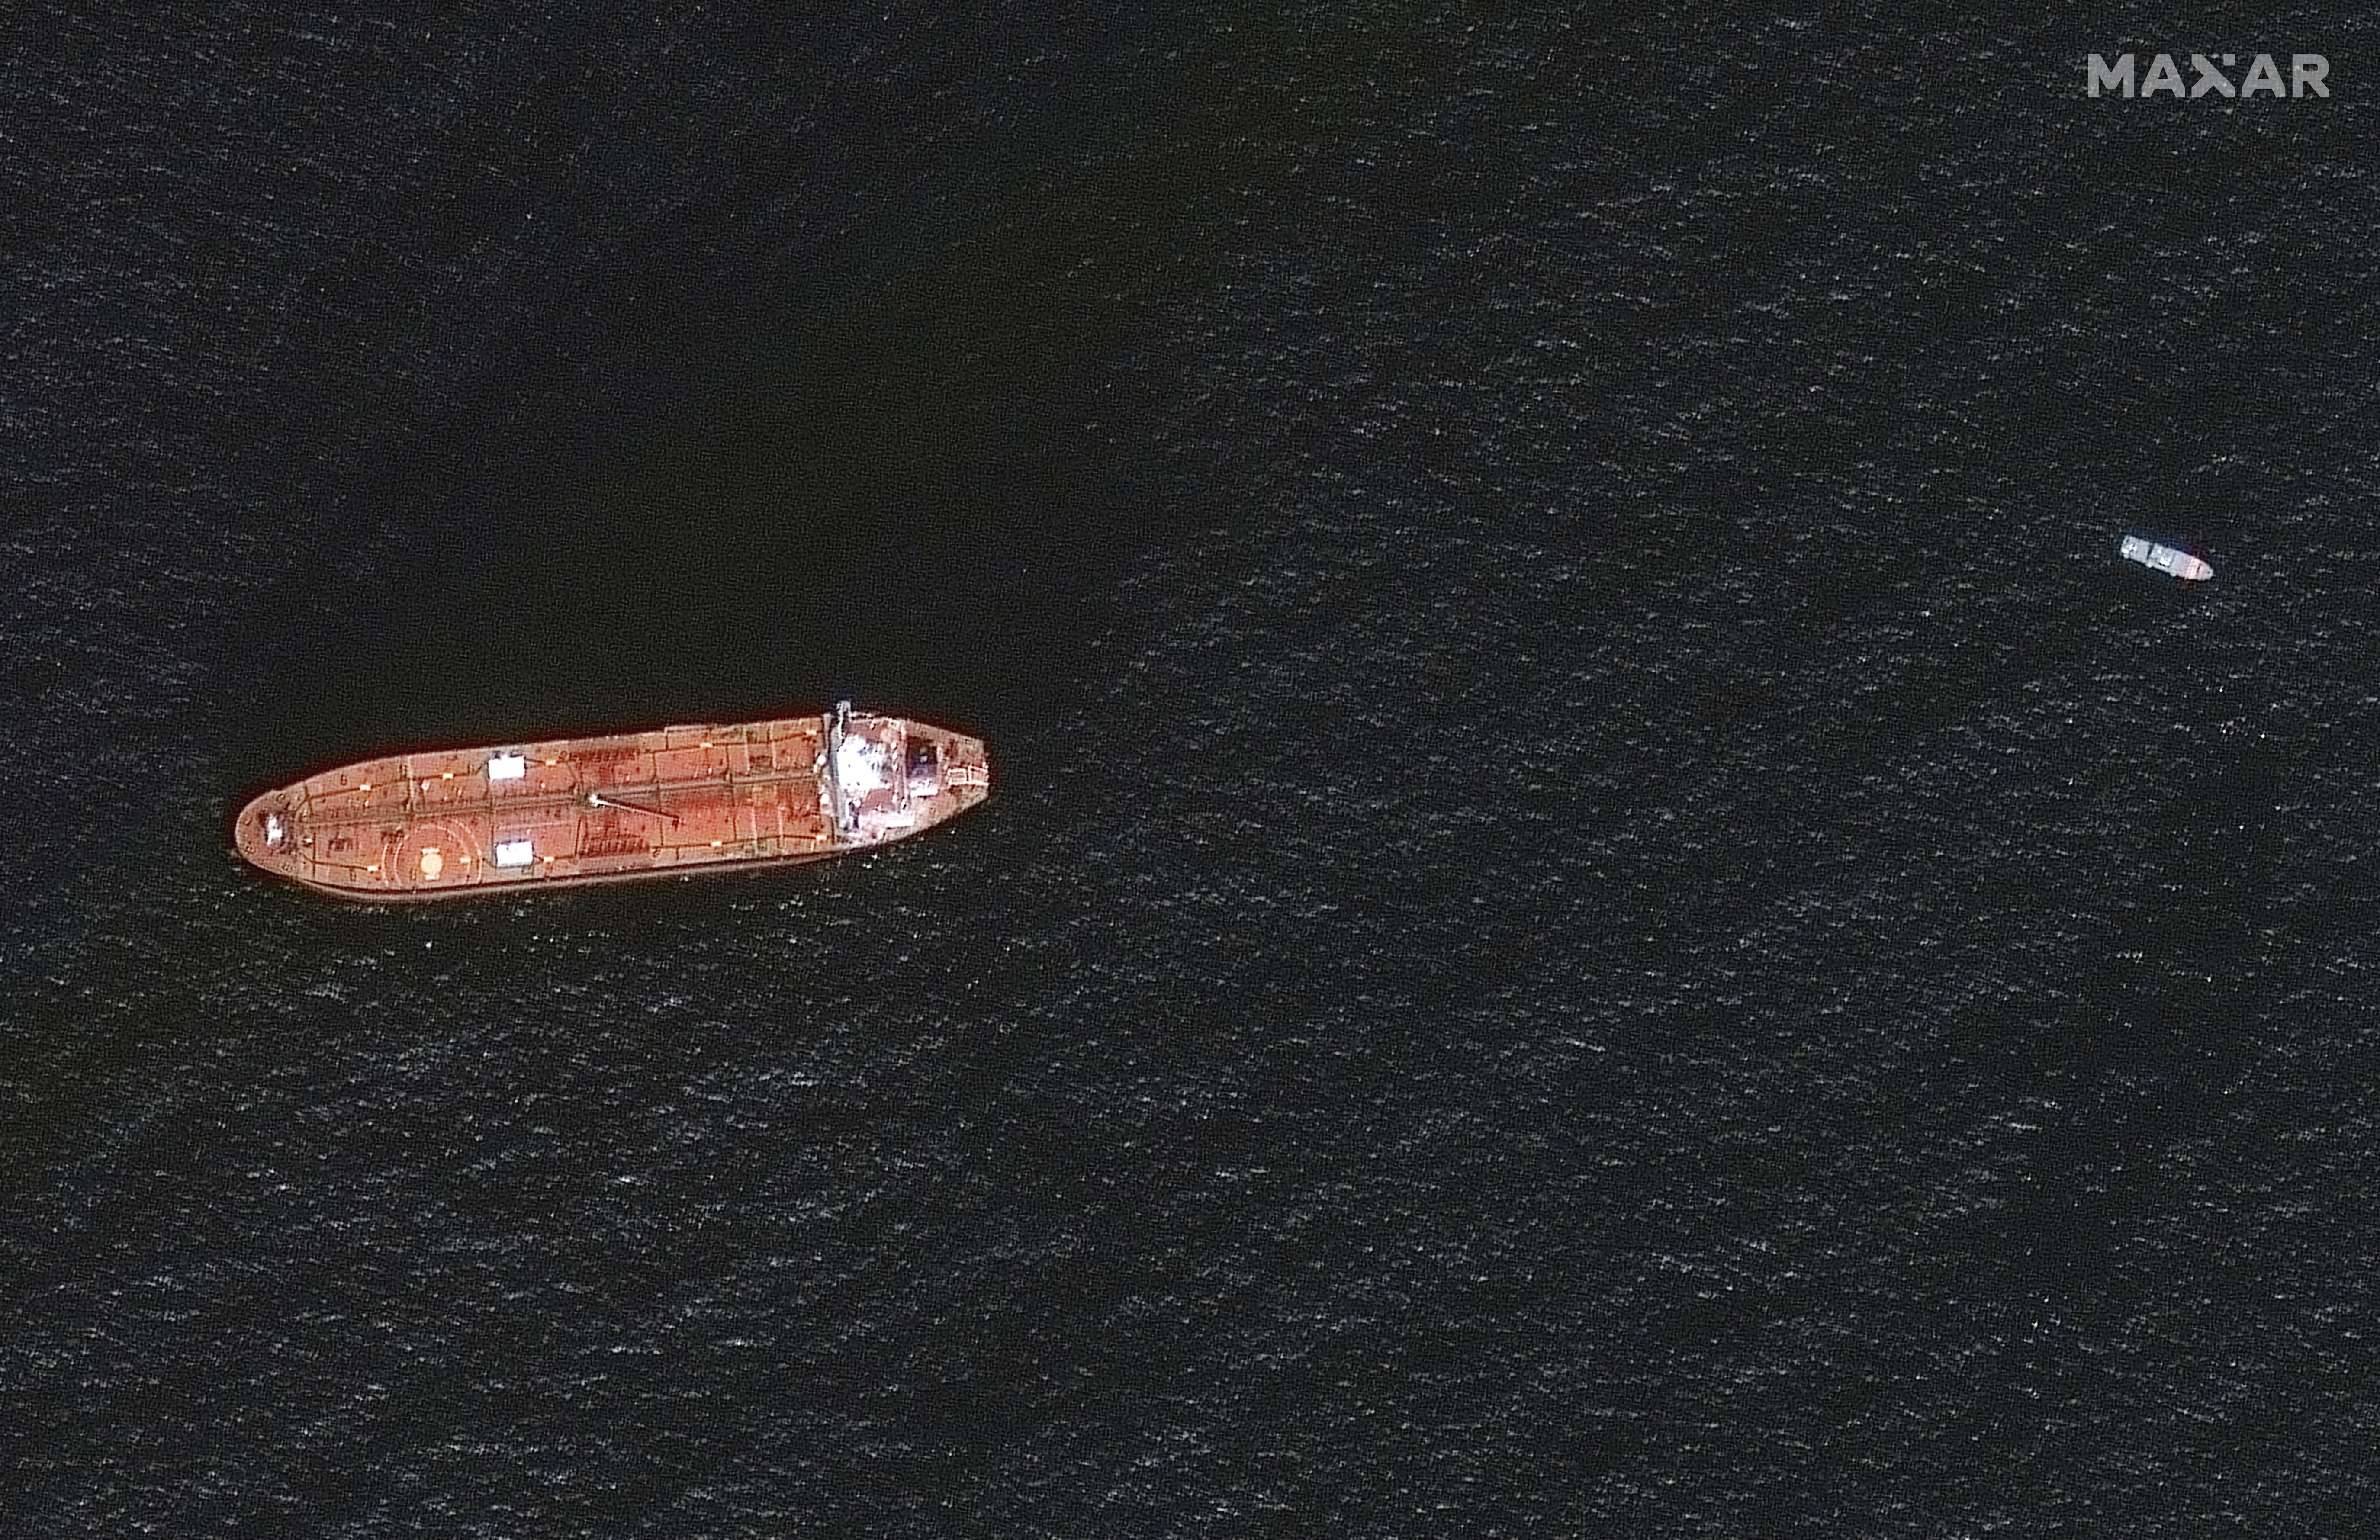 Una imagen satelital del buque Mercer Street, atacado por drones que causaron dos muertes cerca de Fujairah, Emiratos Árabes (Maxar Technologies/Handout via REUTERS)